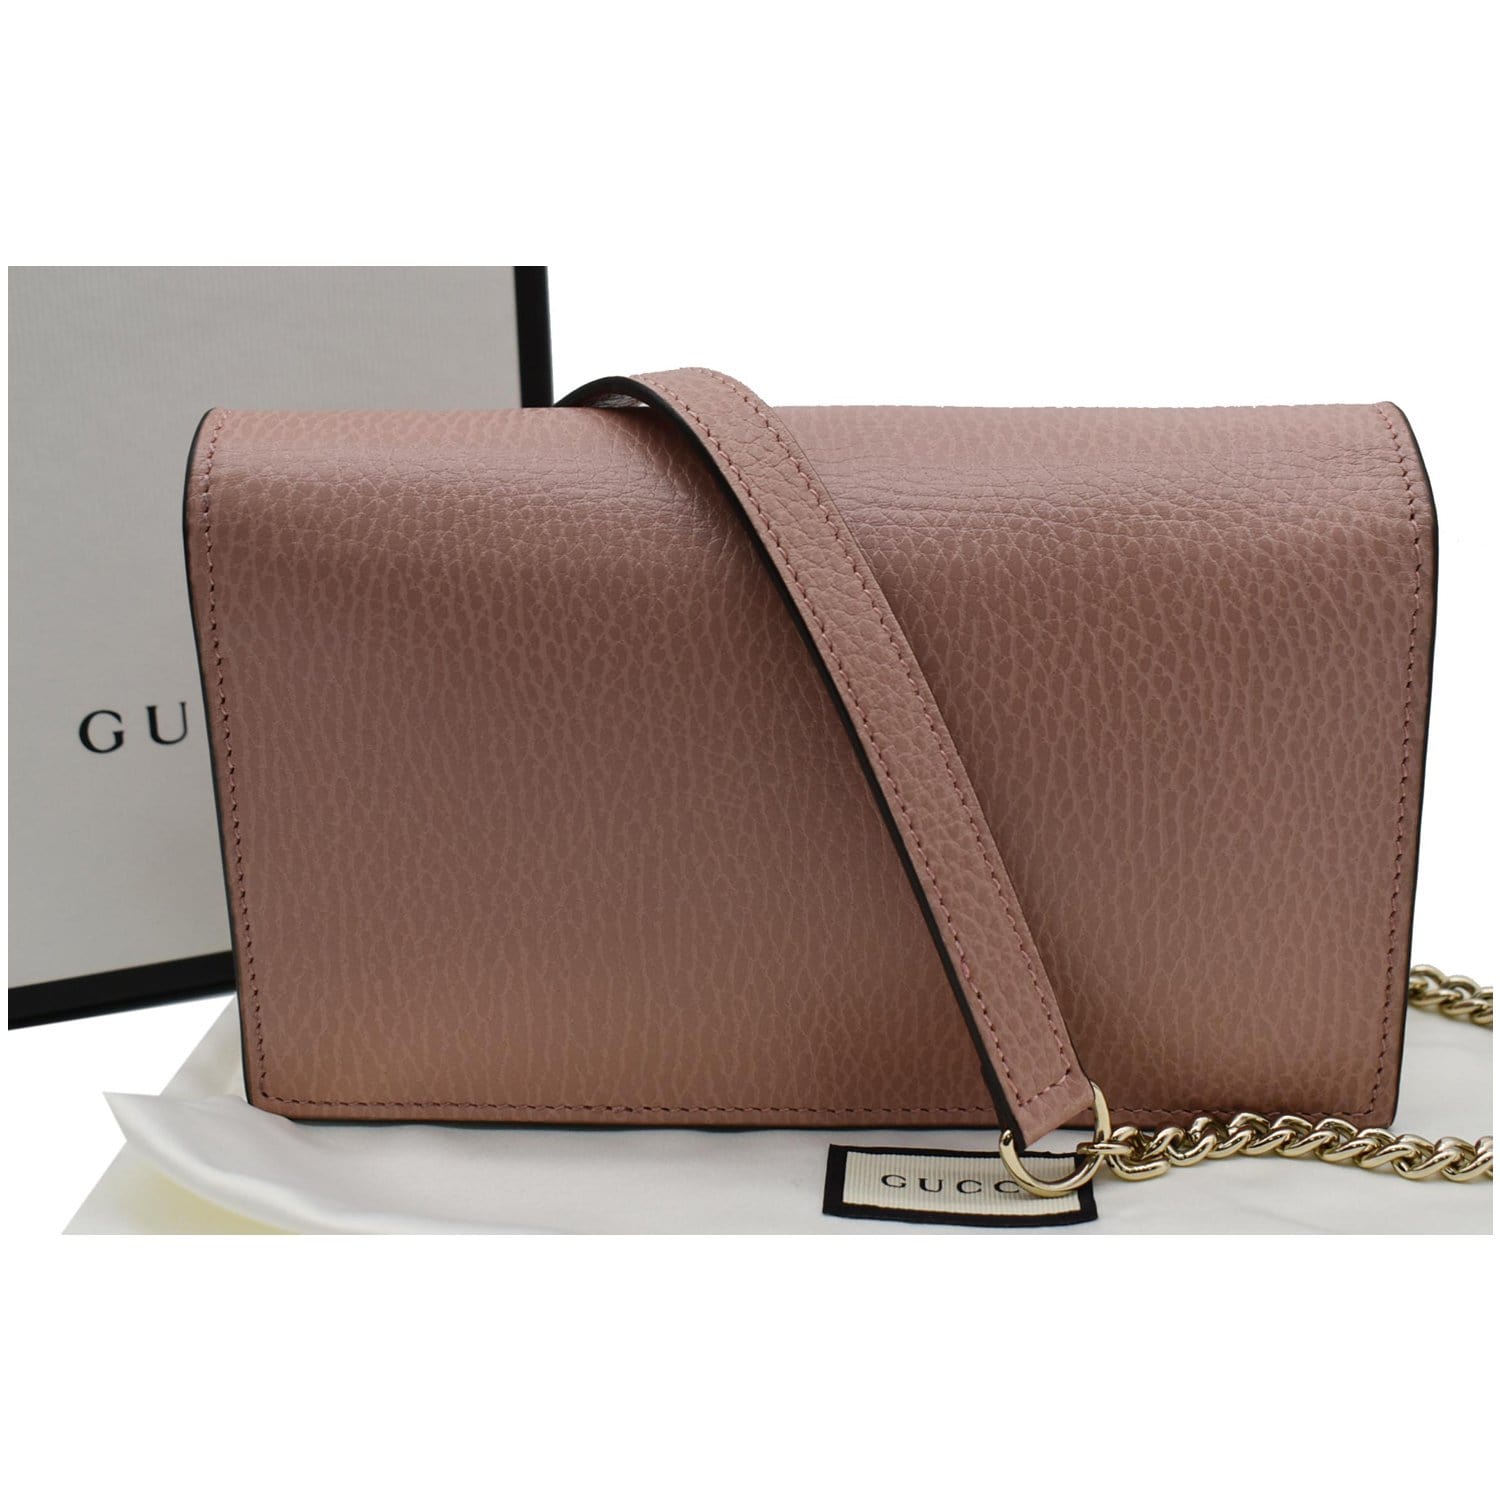 Gucci Dollar Calfskin Interlocking GG Small Shoulder Bag - Soft Pink